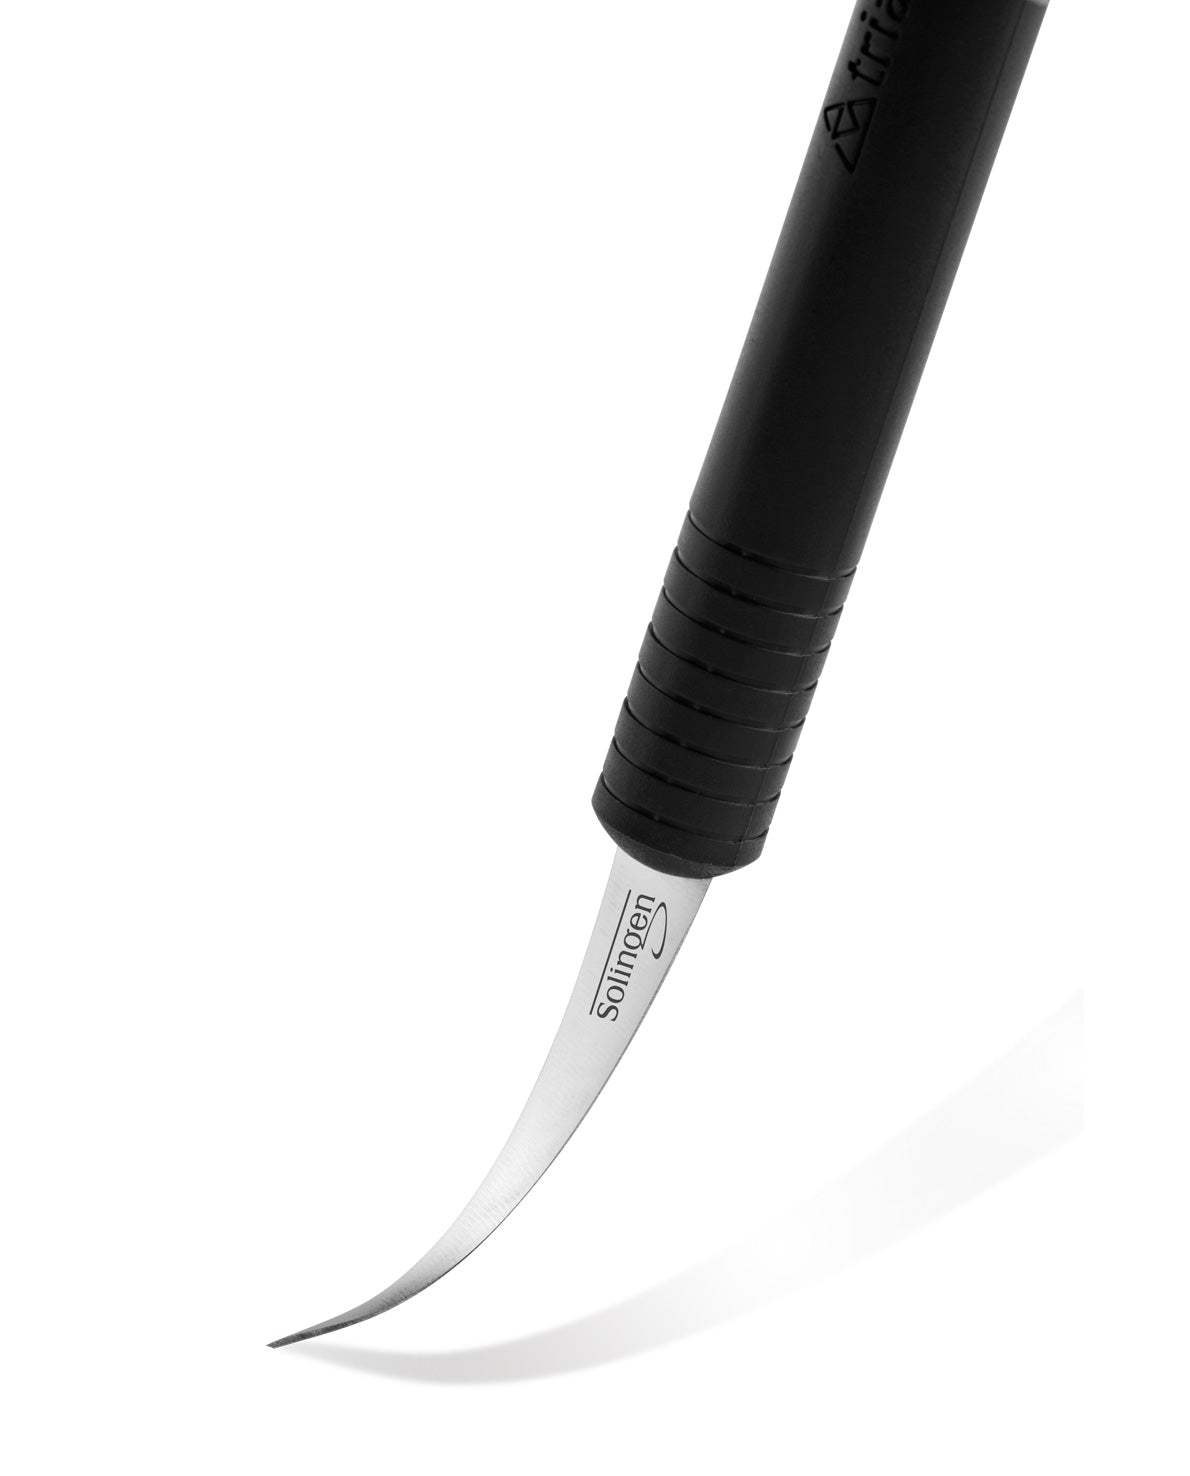 Thai Knife -266625002